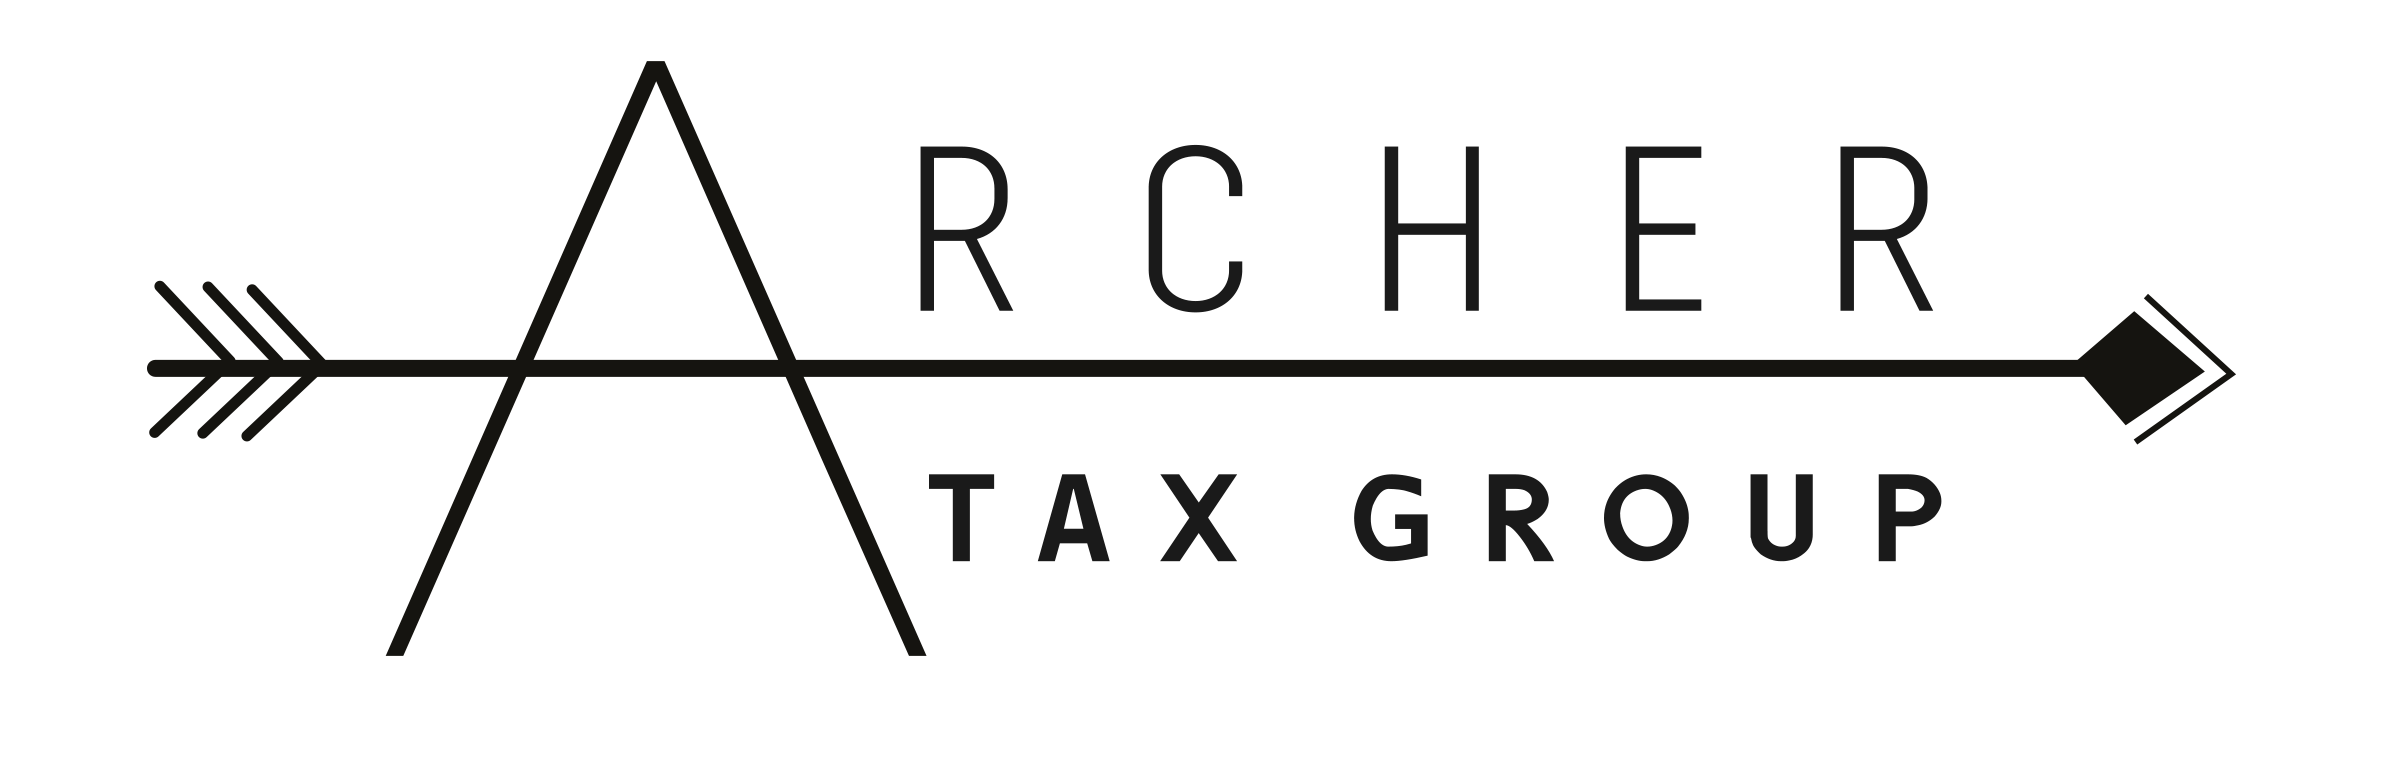 Archer Tax Group, LLC